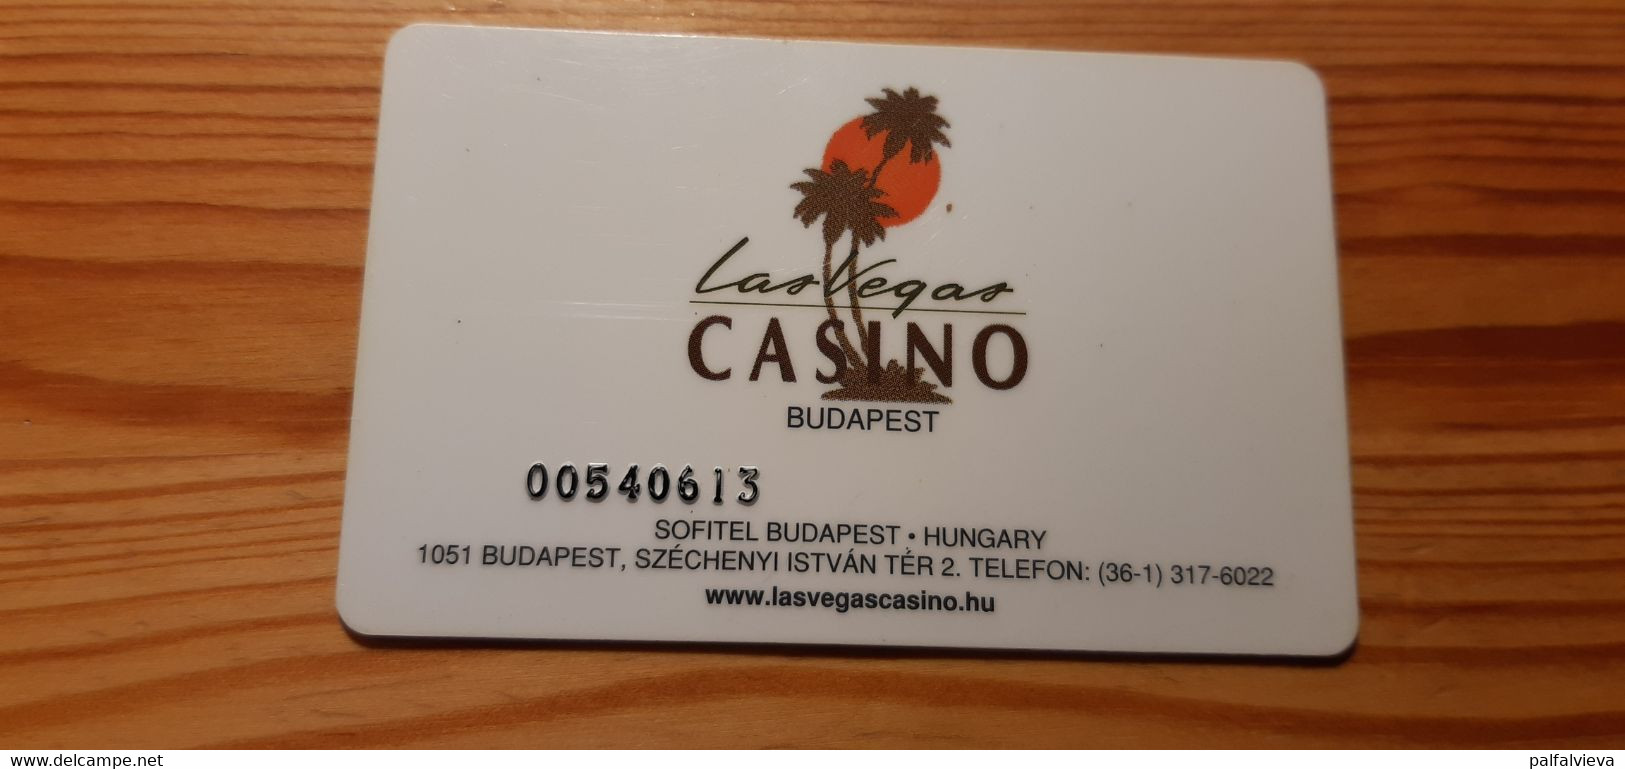 Las Vegas Casino Card Hungary - Casinokarten